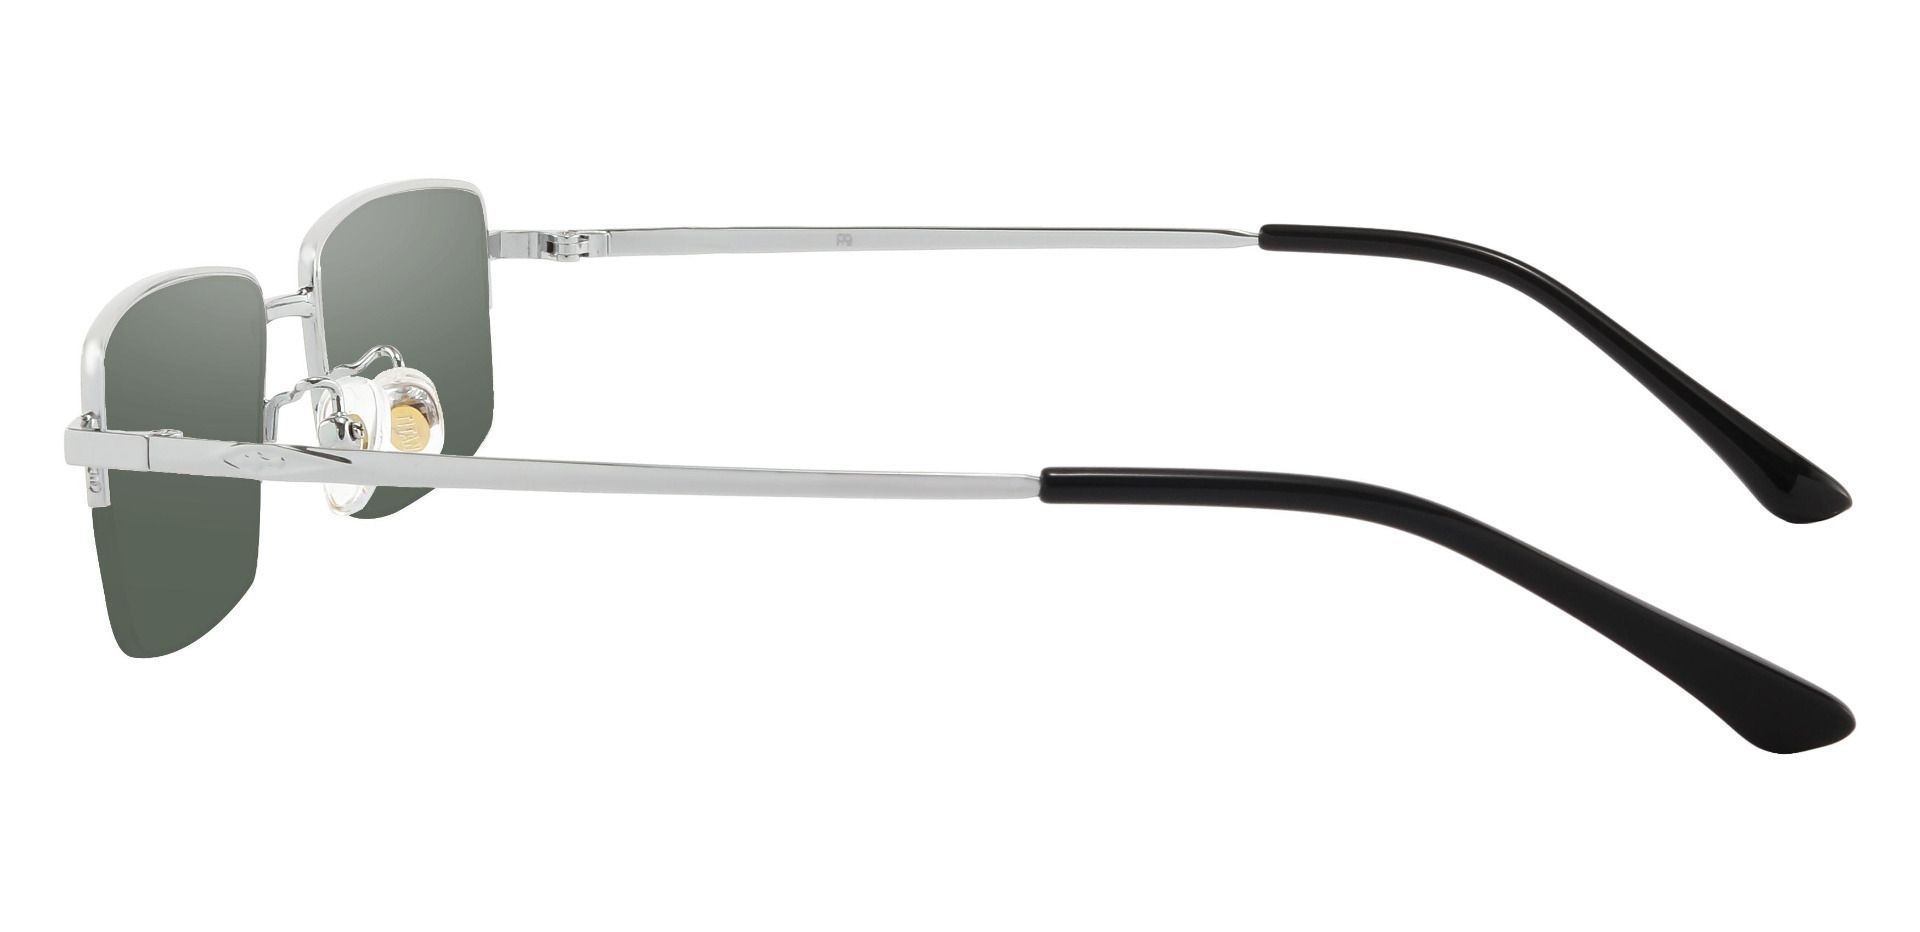 Waldo Rectangle Prescription Sunglasses - Silver Frame With Green Lenses